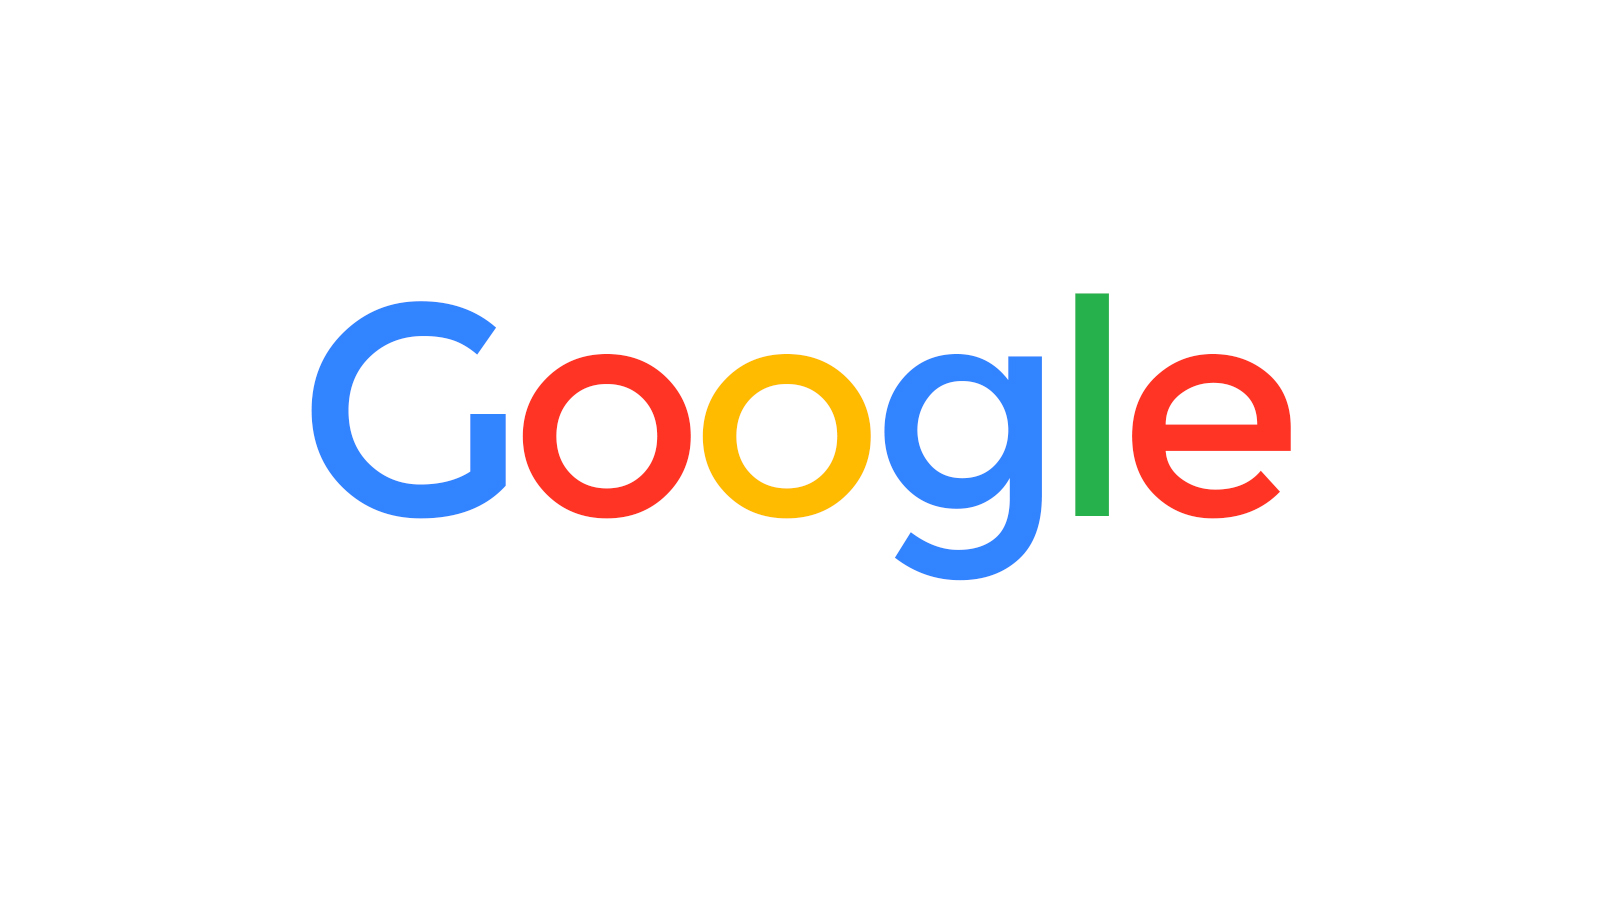 Google เผยรายชื่อแอพฯ ยอดเยี่ยมประจำปี 2016